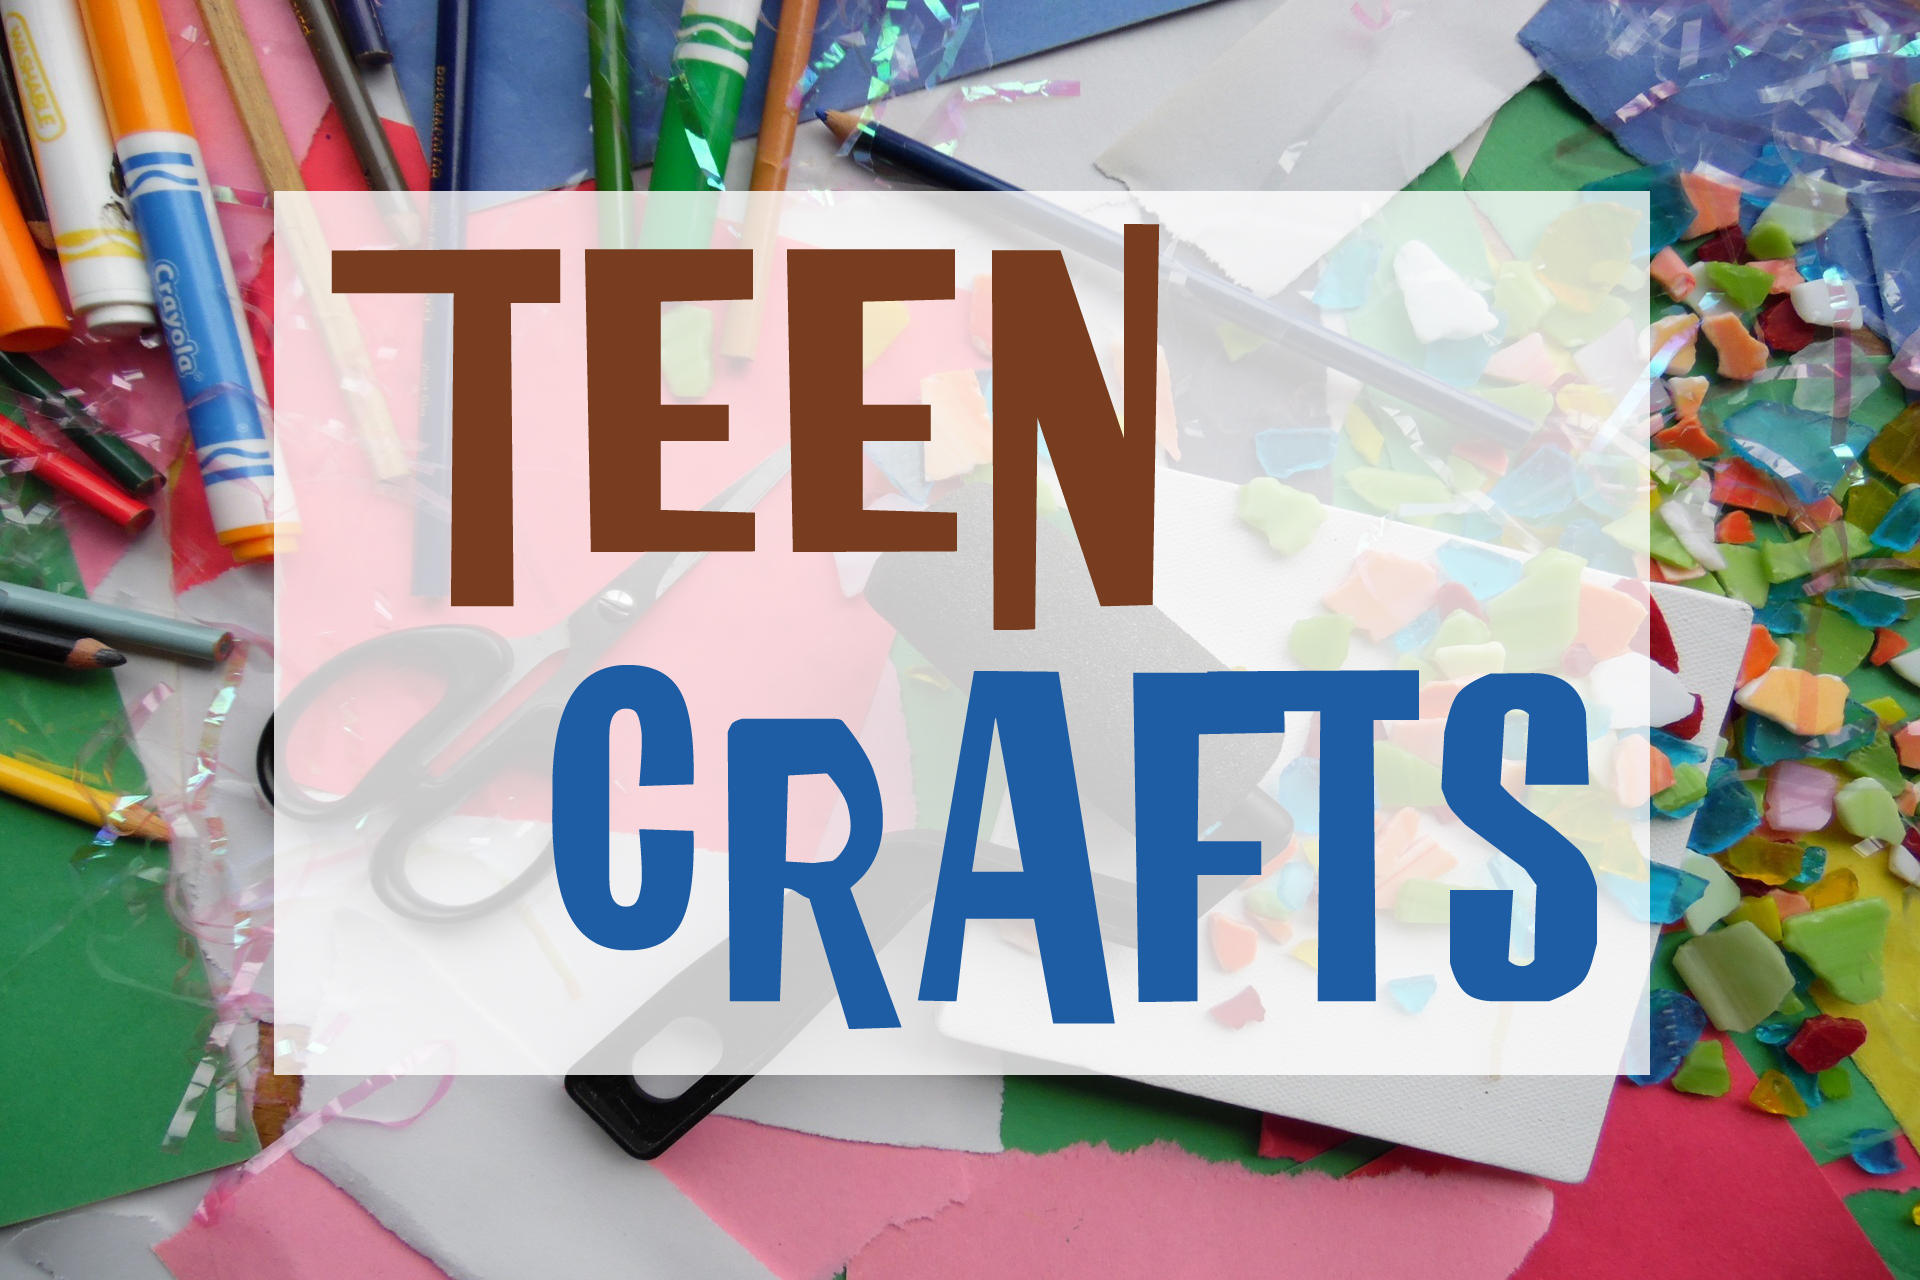 Crafts Teen 5